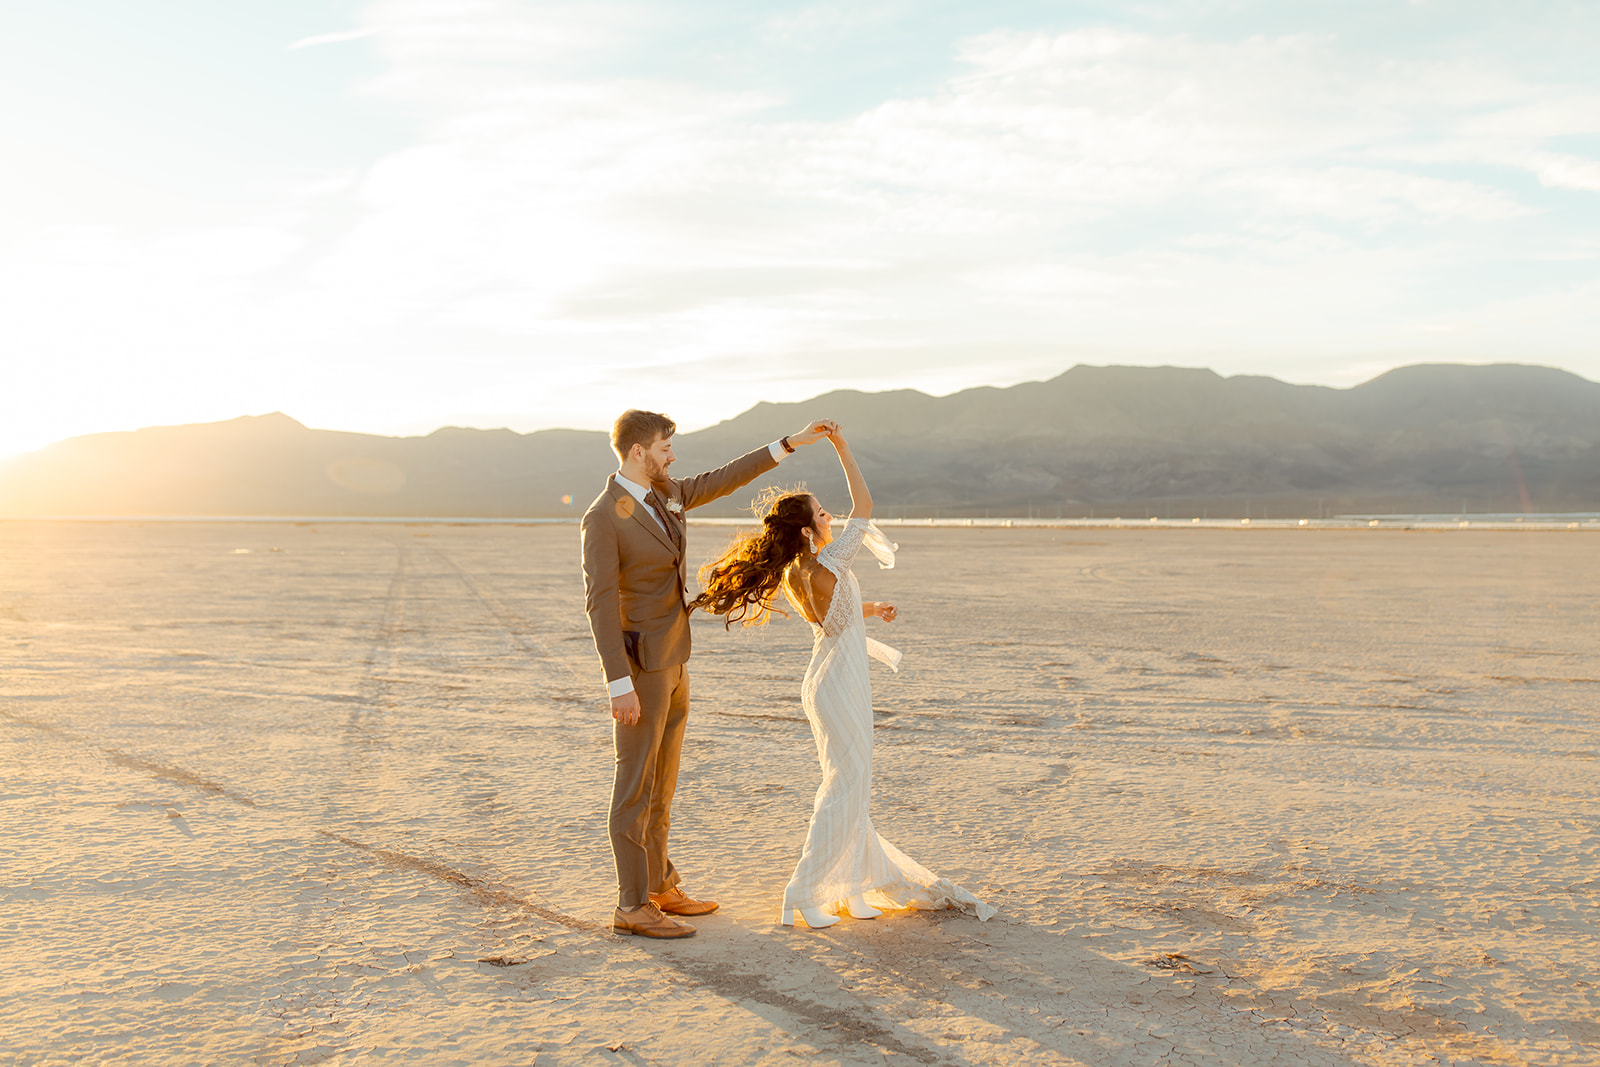 Newlyweds dancing in the Las Vegas desert during sunset 